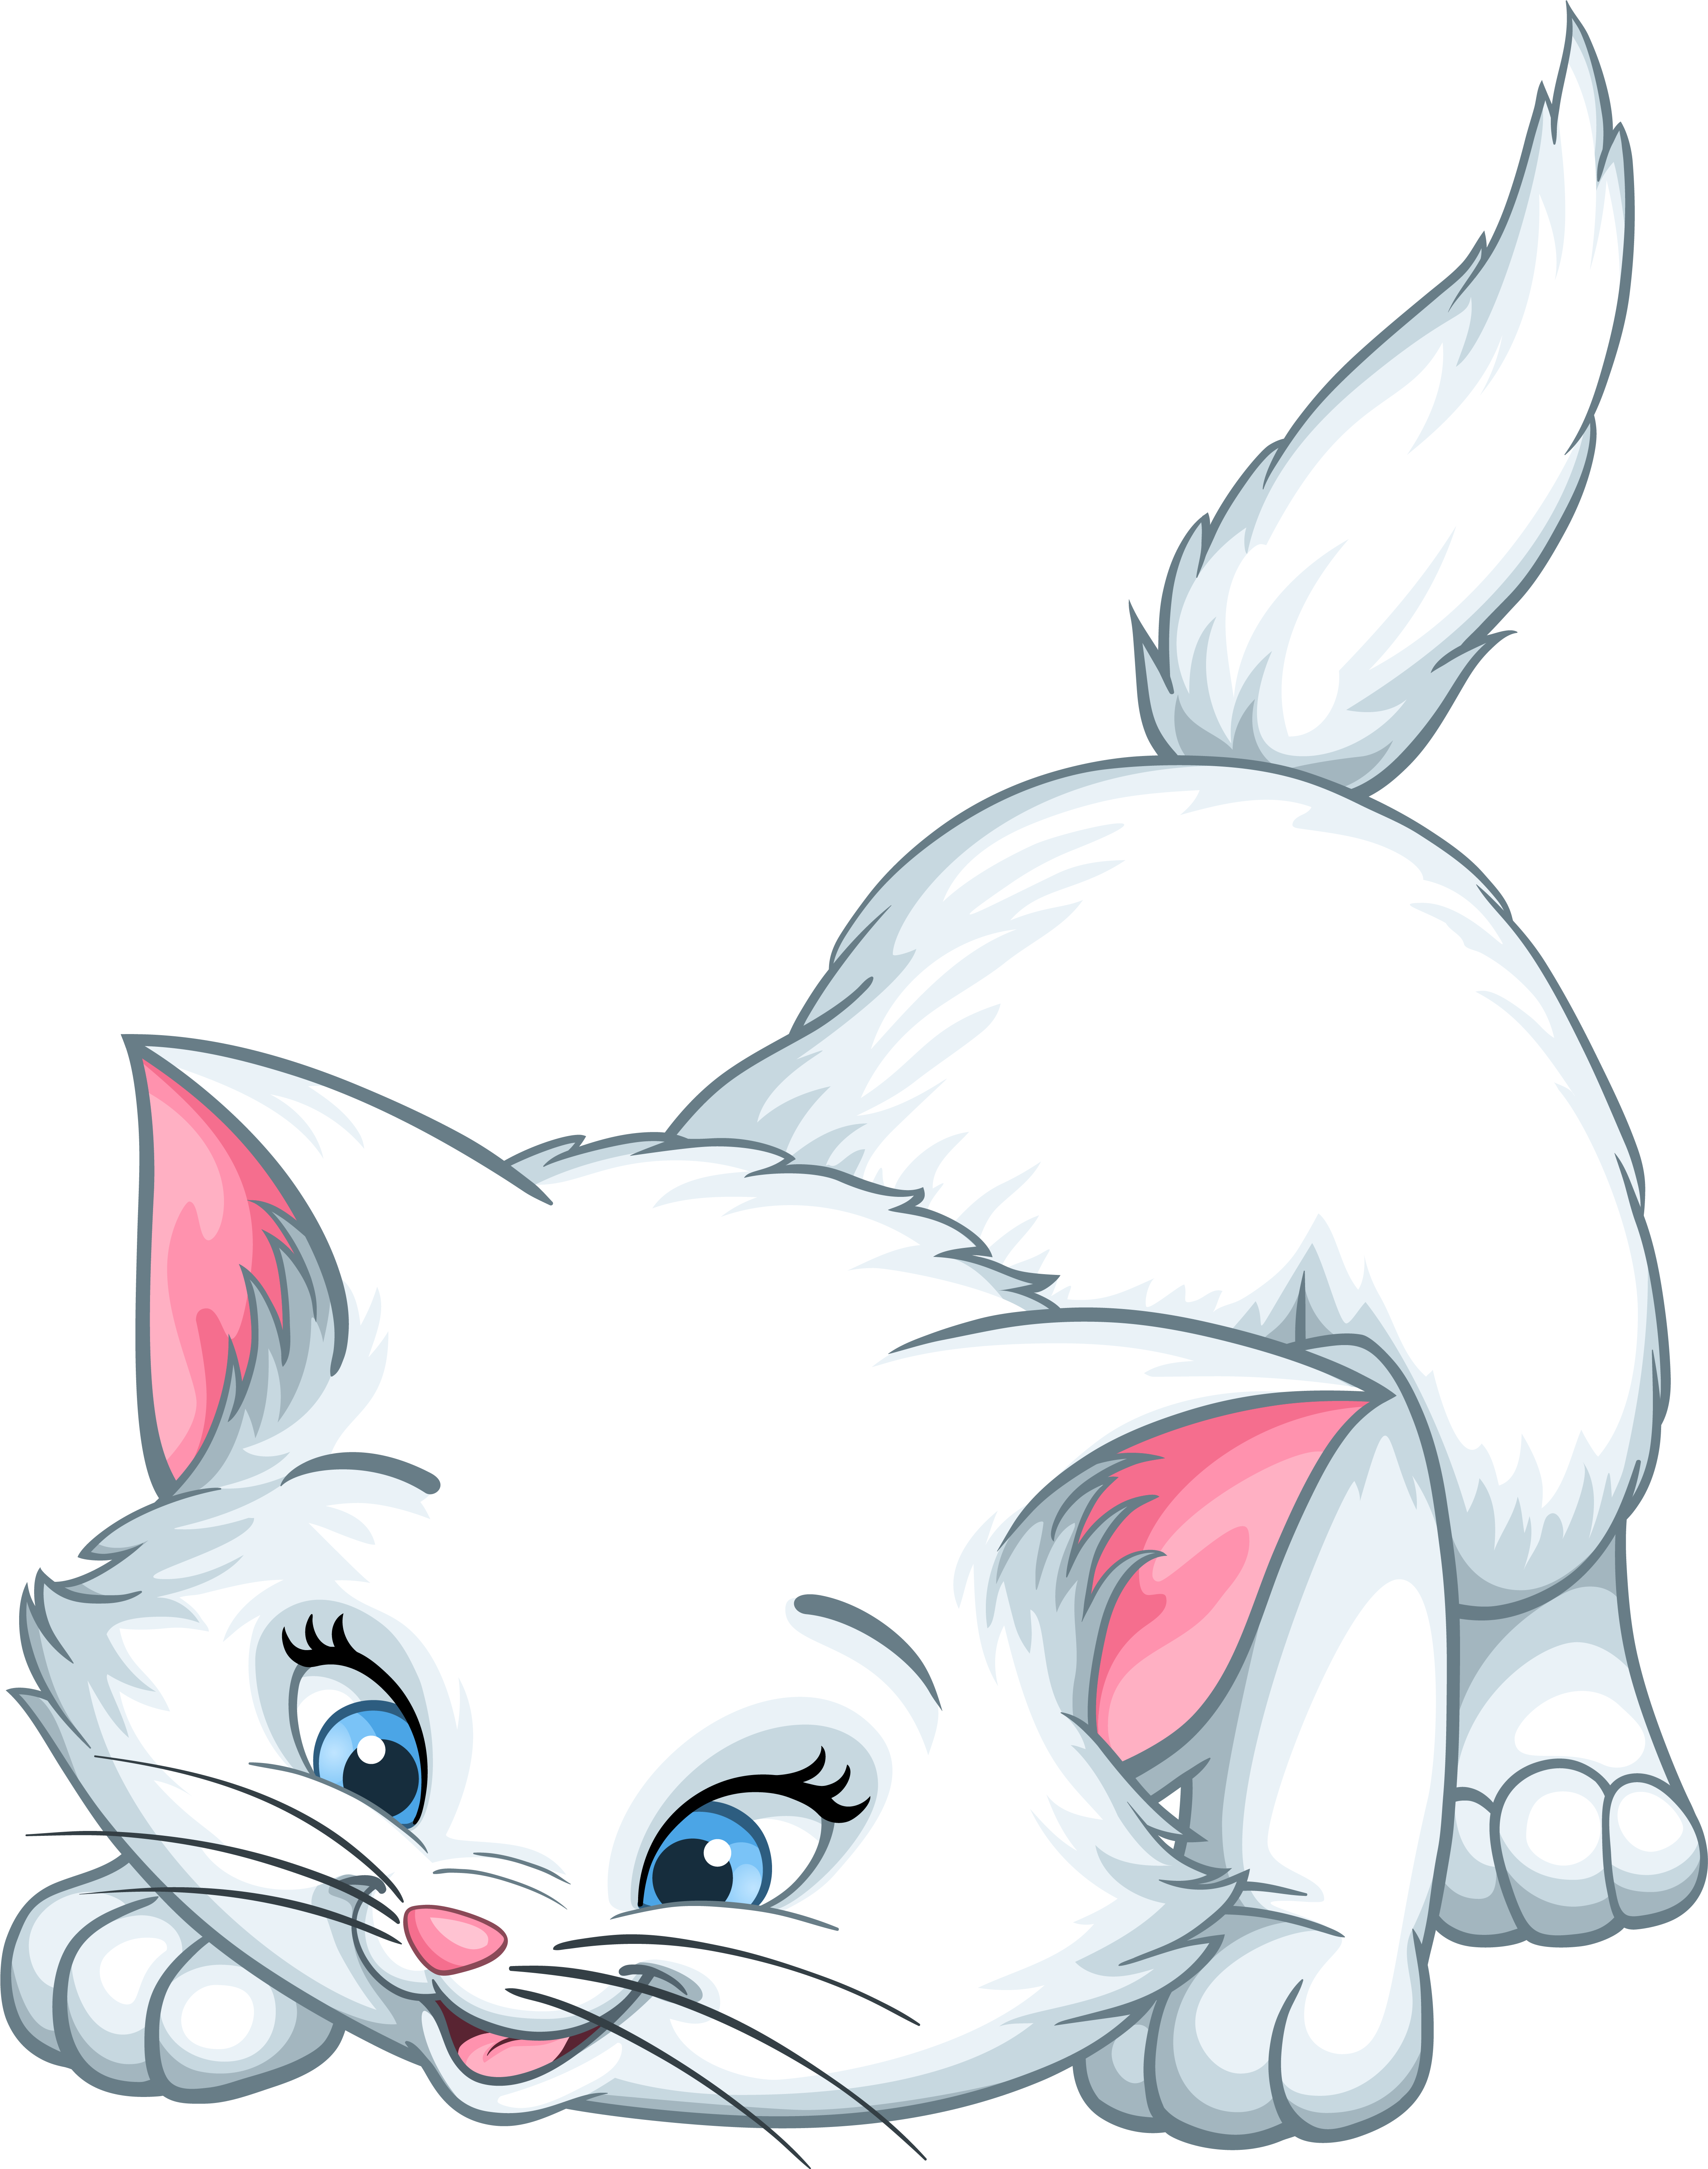 A Cartoon Of A White Cat